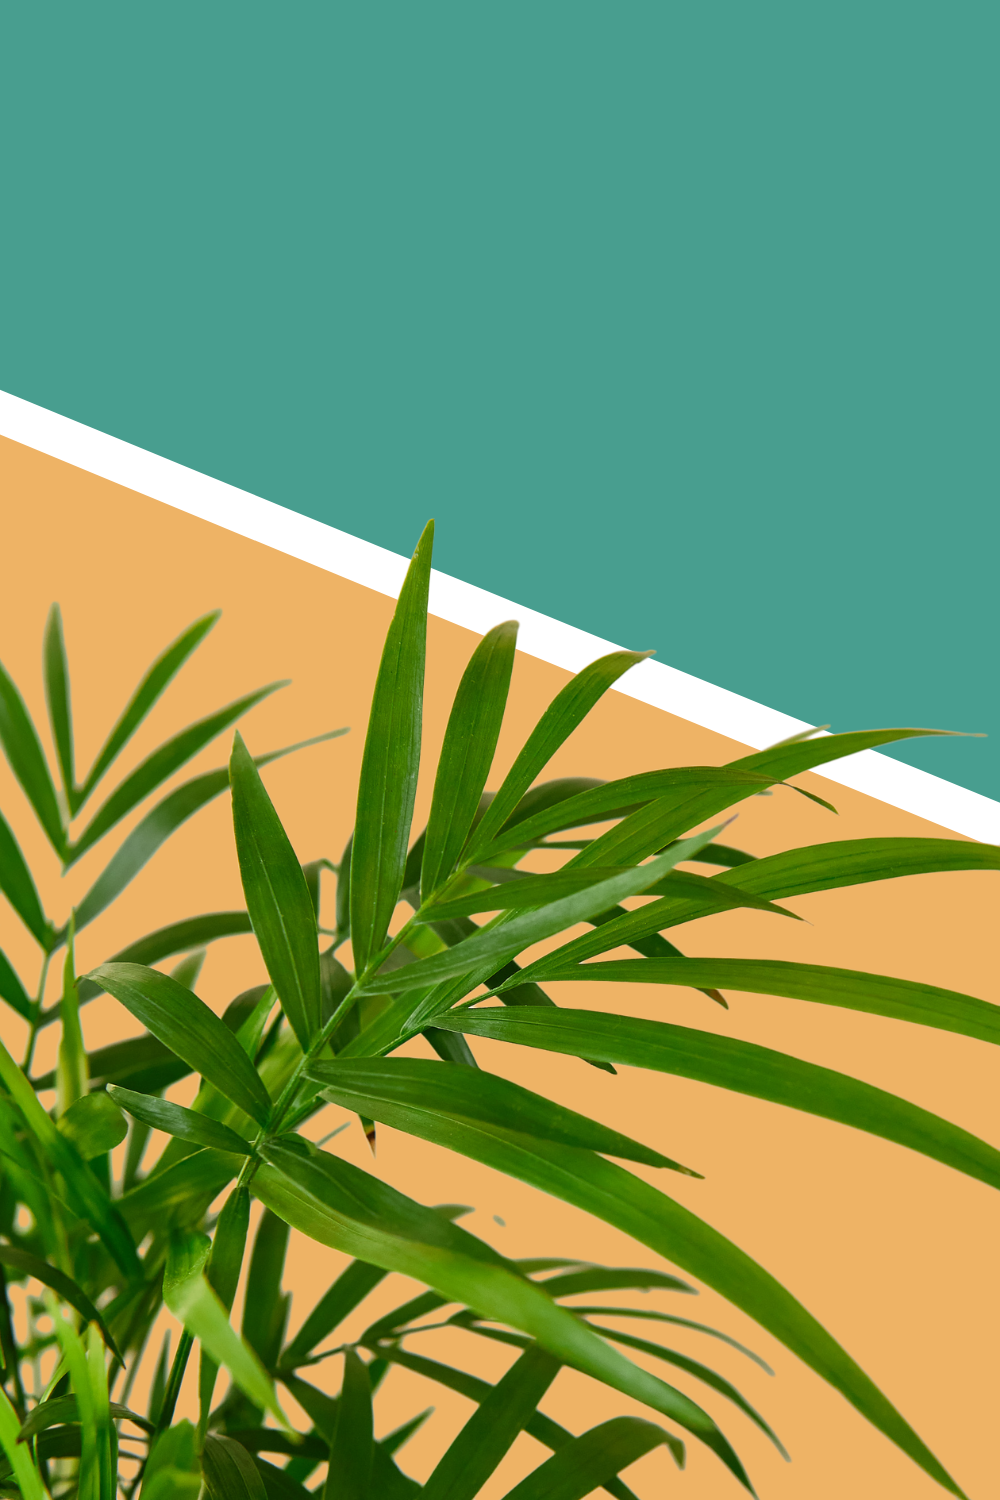 parlor palm, palms for sale, parlor palm for sale, houseplants online, indoor plants, green door garden